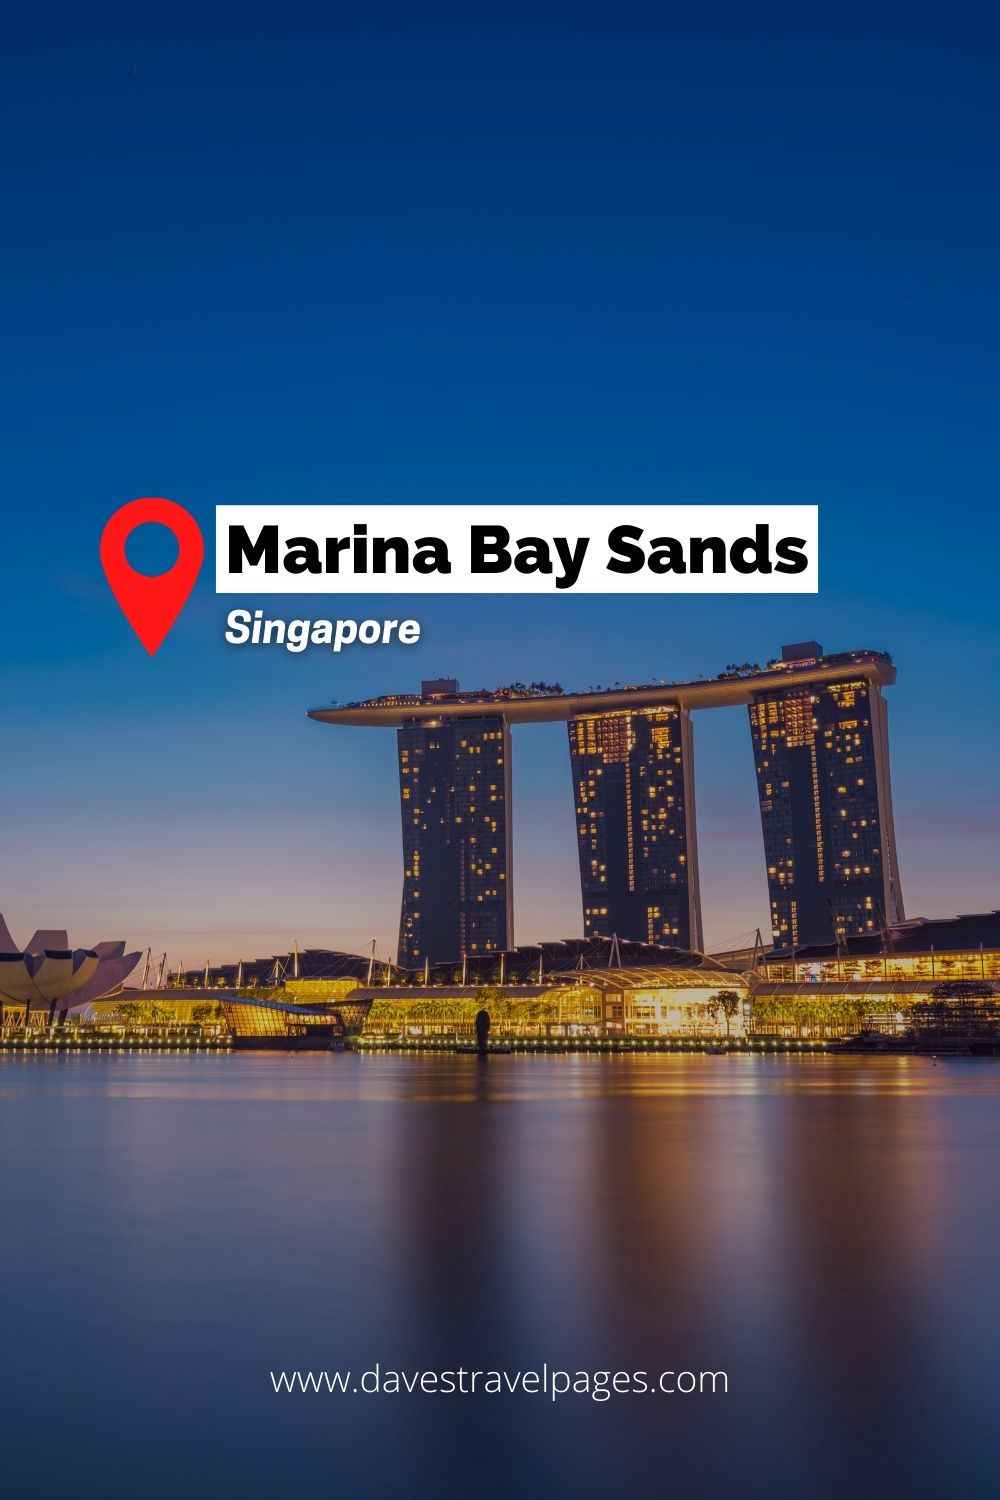 Marina Bay Sands in Singapore - A Modern Landmark